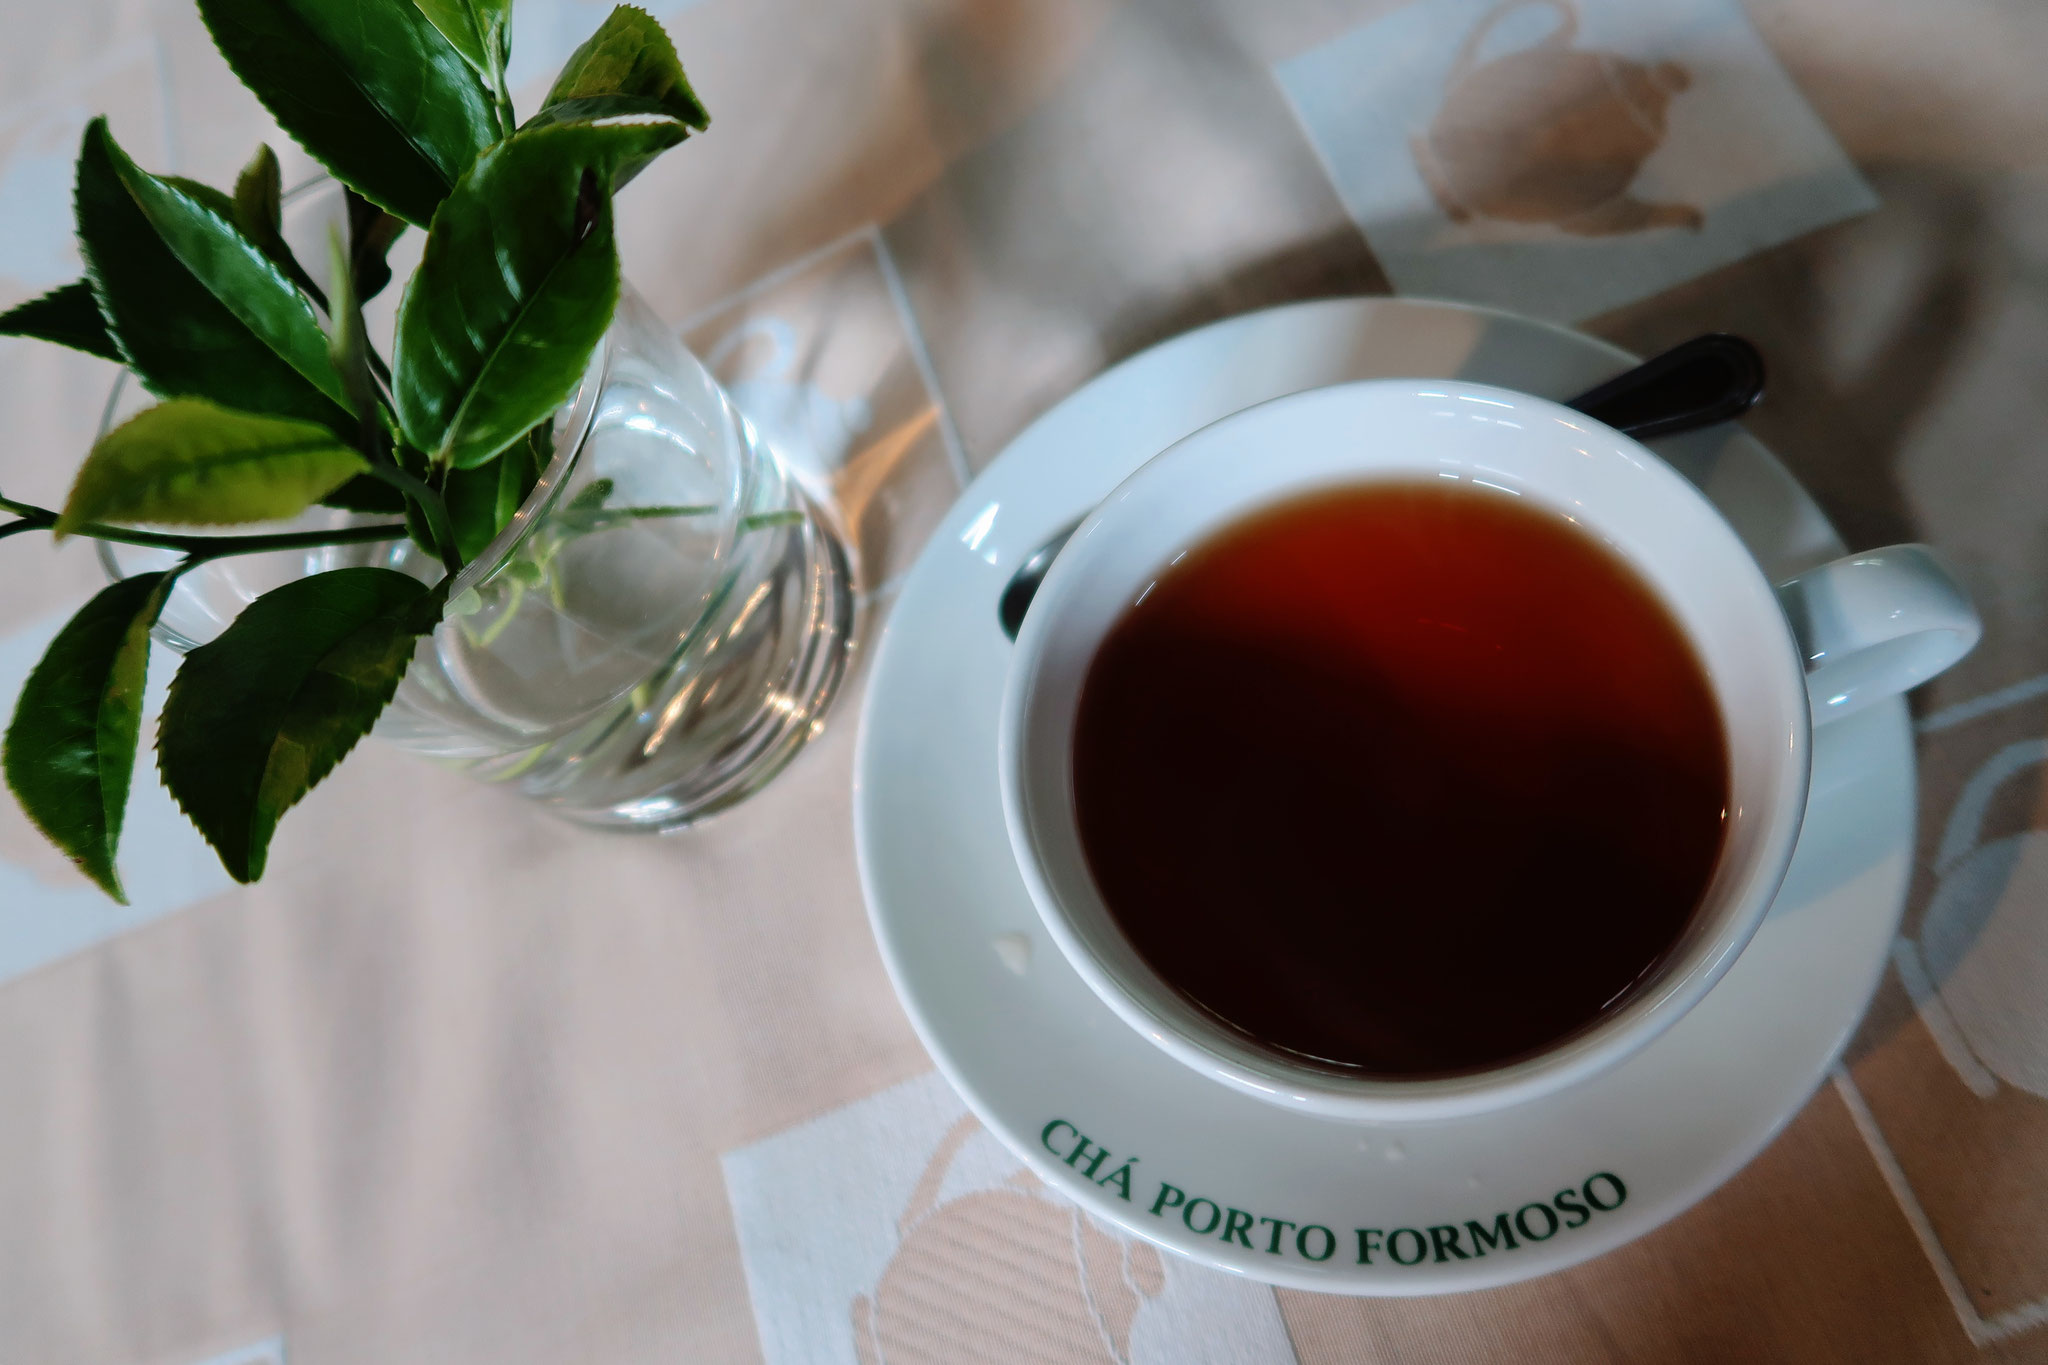 Teeverkosteung Cha Porto Formoso auf Sao Miguel